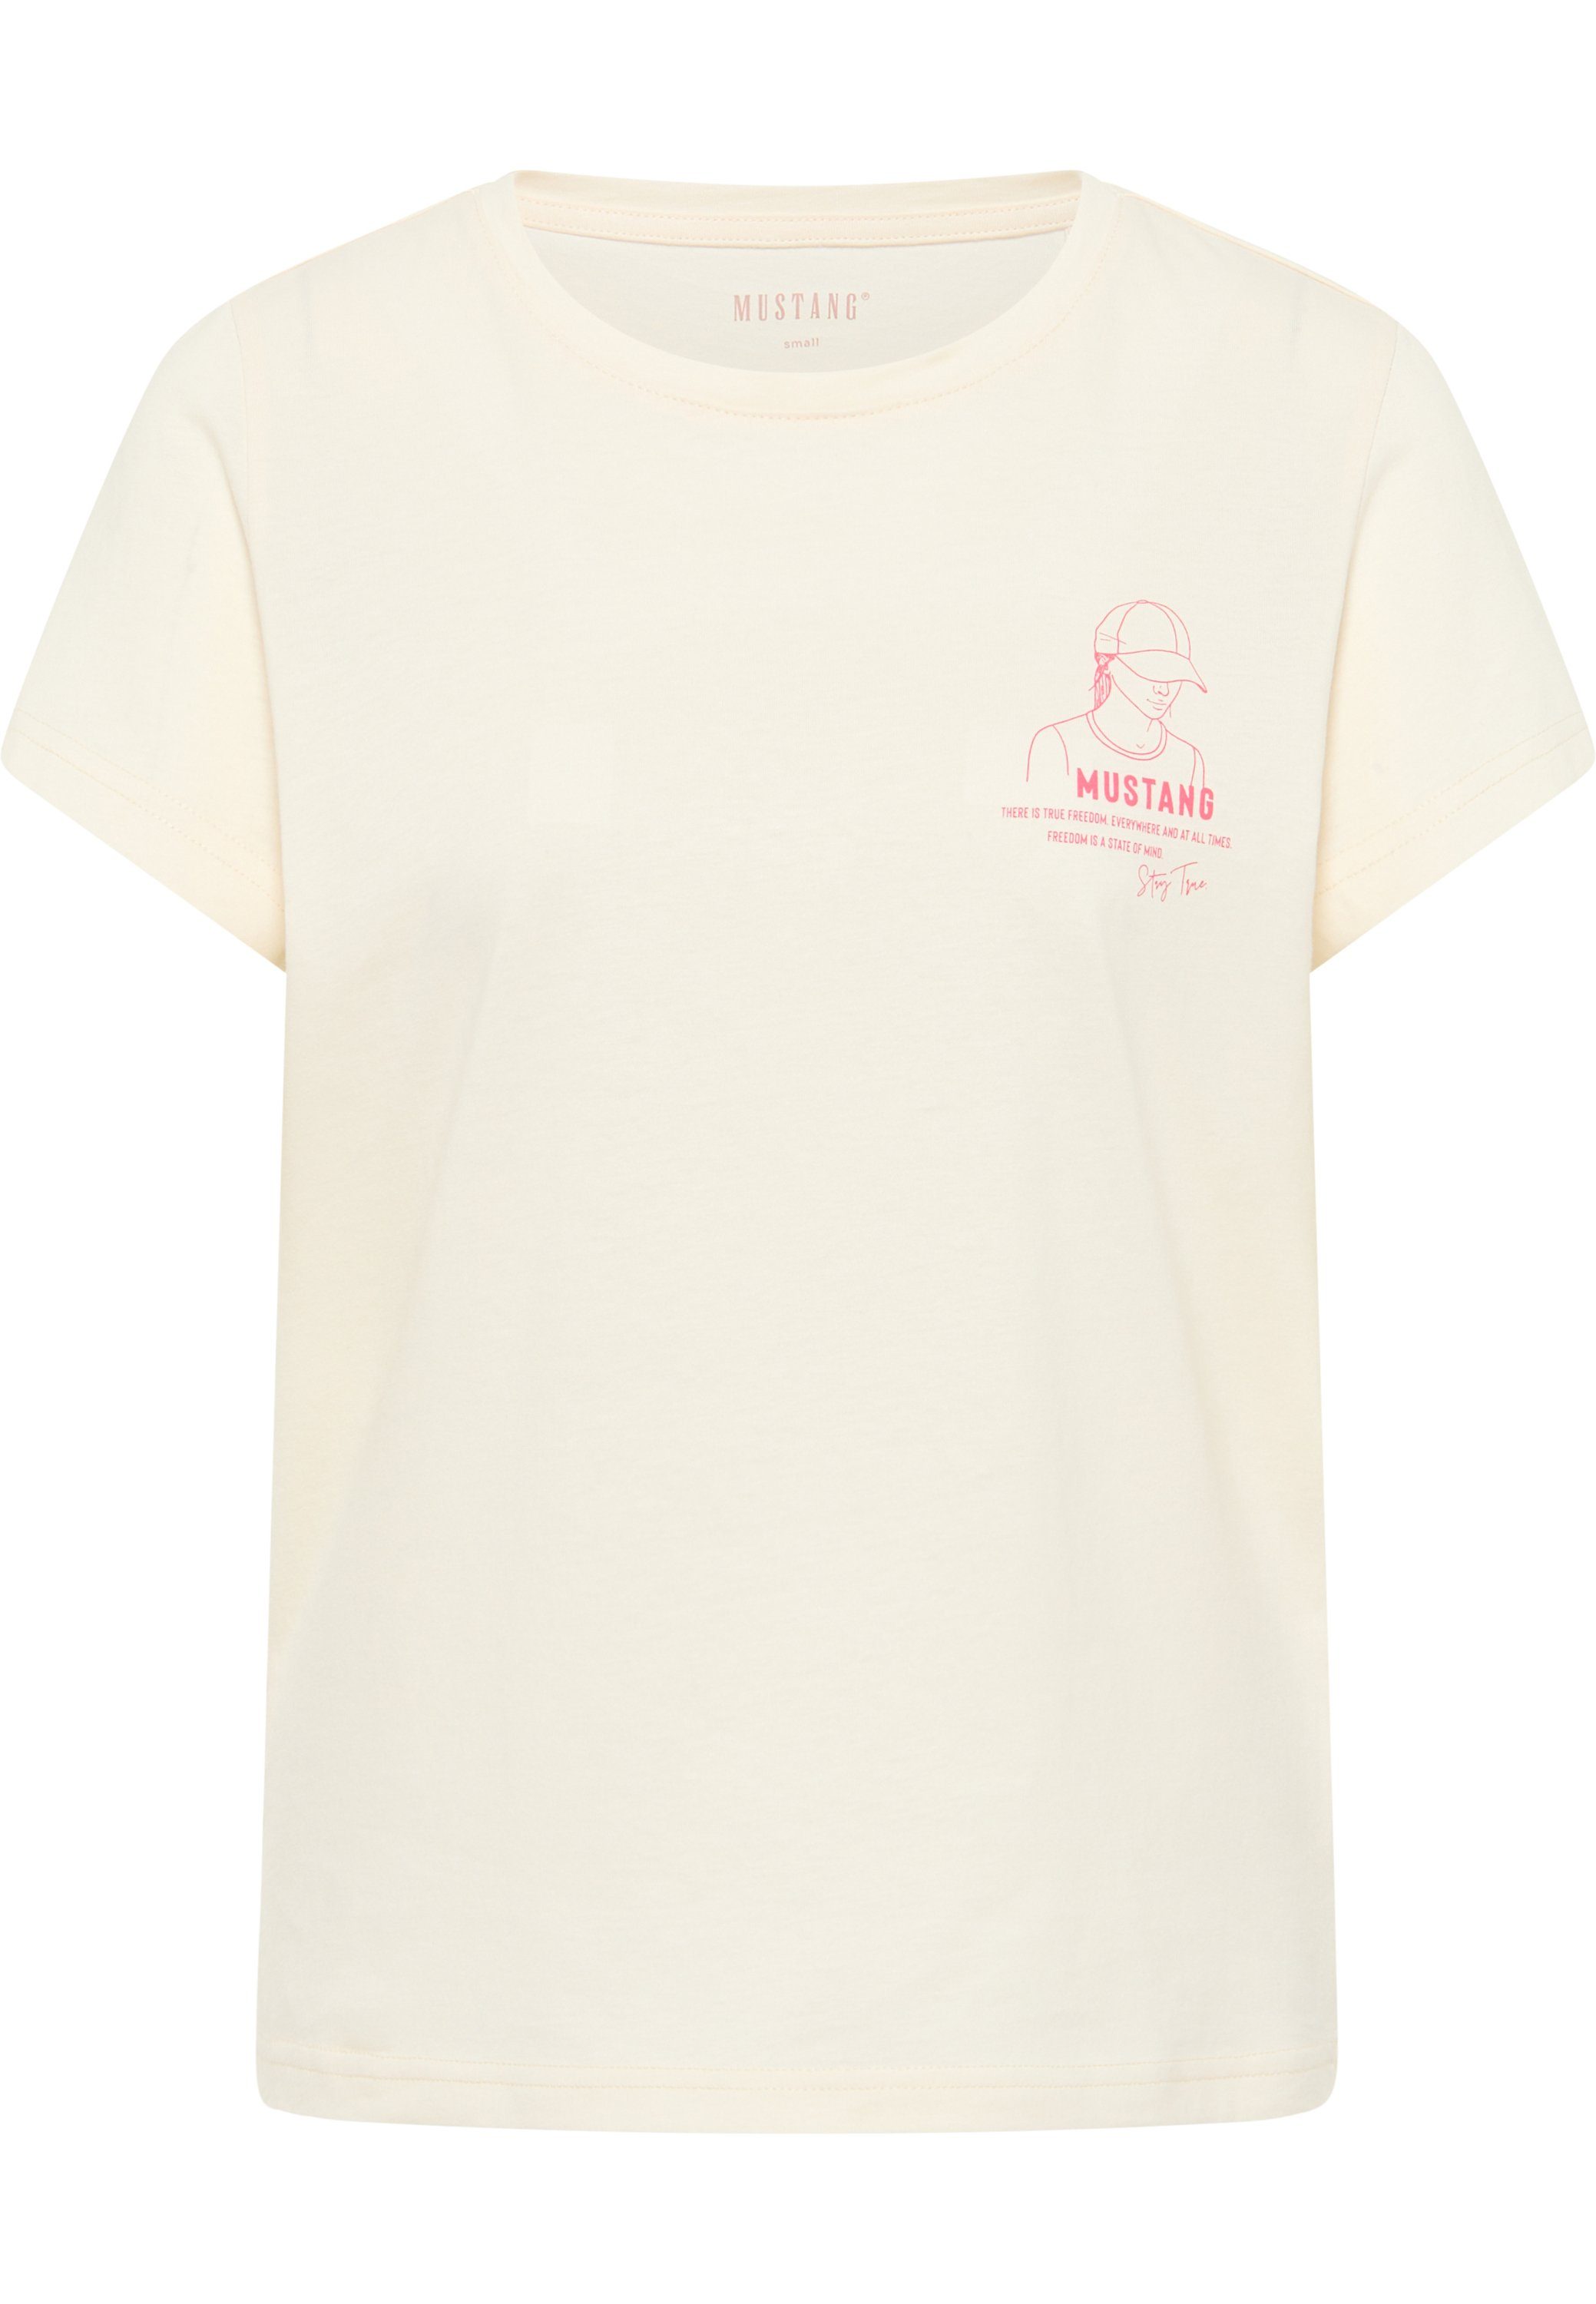 MUSTANG T-Shirt Kurzarmshirt Statement-Print T-Shirt, Mustang auf Brusthöhe